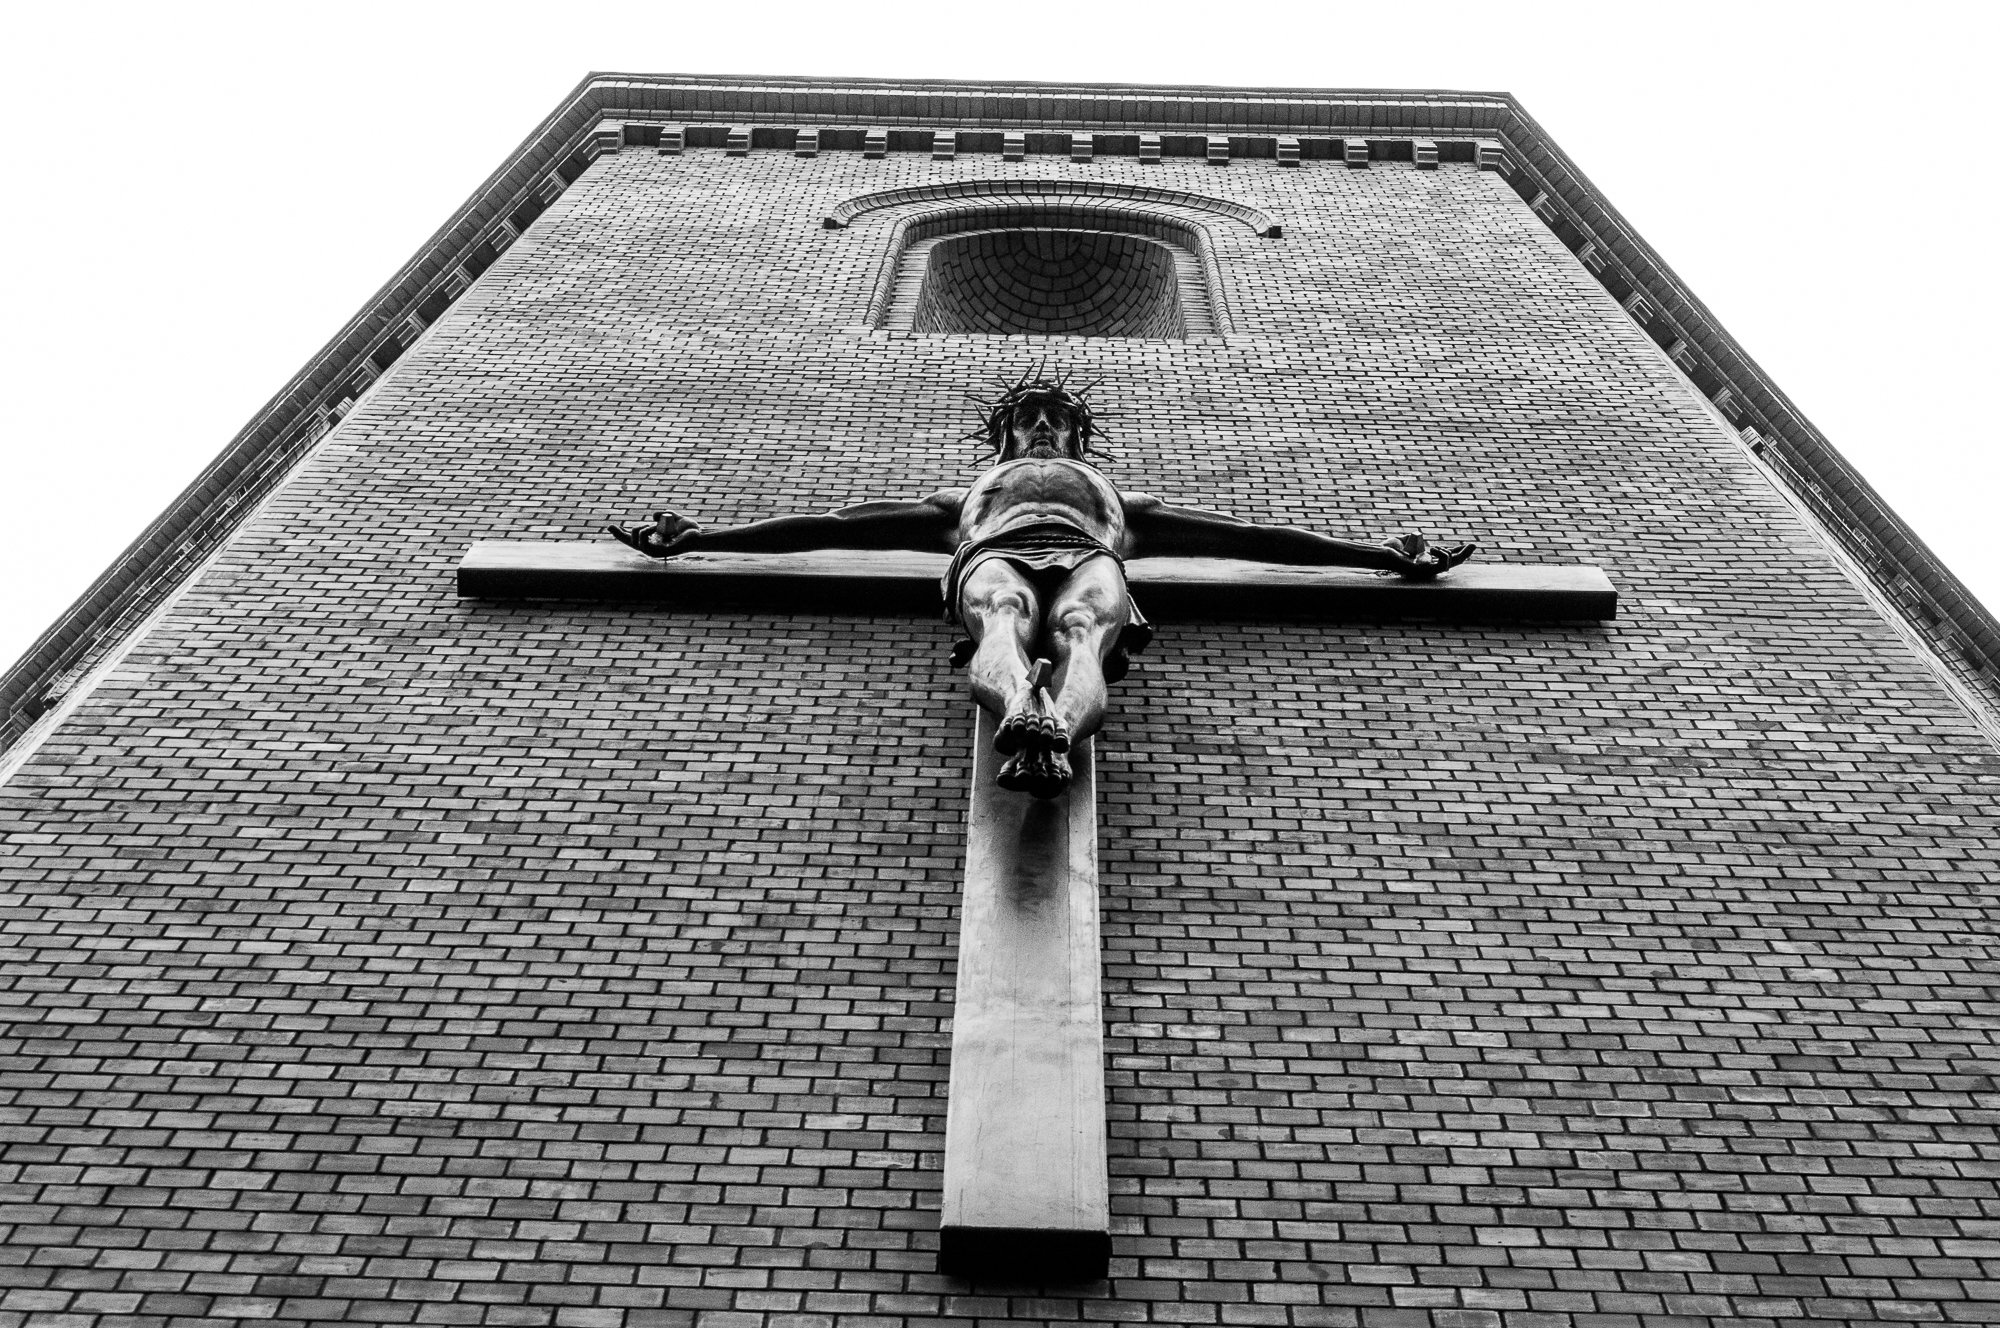 Adam Mazek Photography Warsaw (Warszawa) 2017. Post: "Where we can find happiness?." Crucifix. Minimalism. Faith.